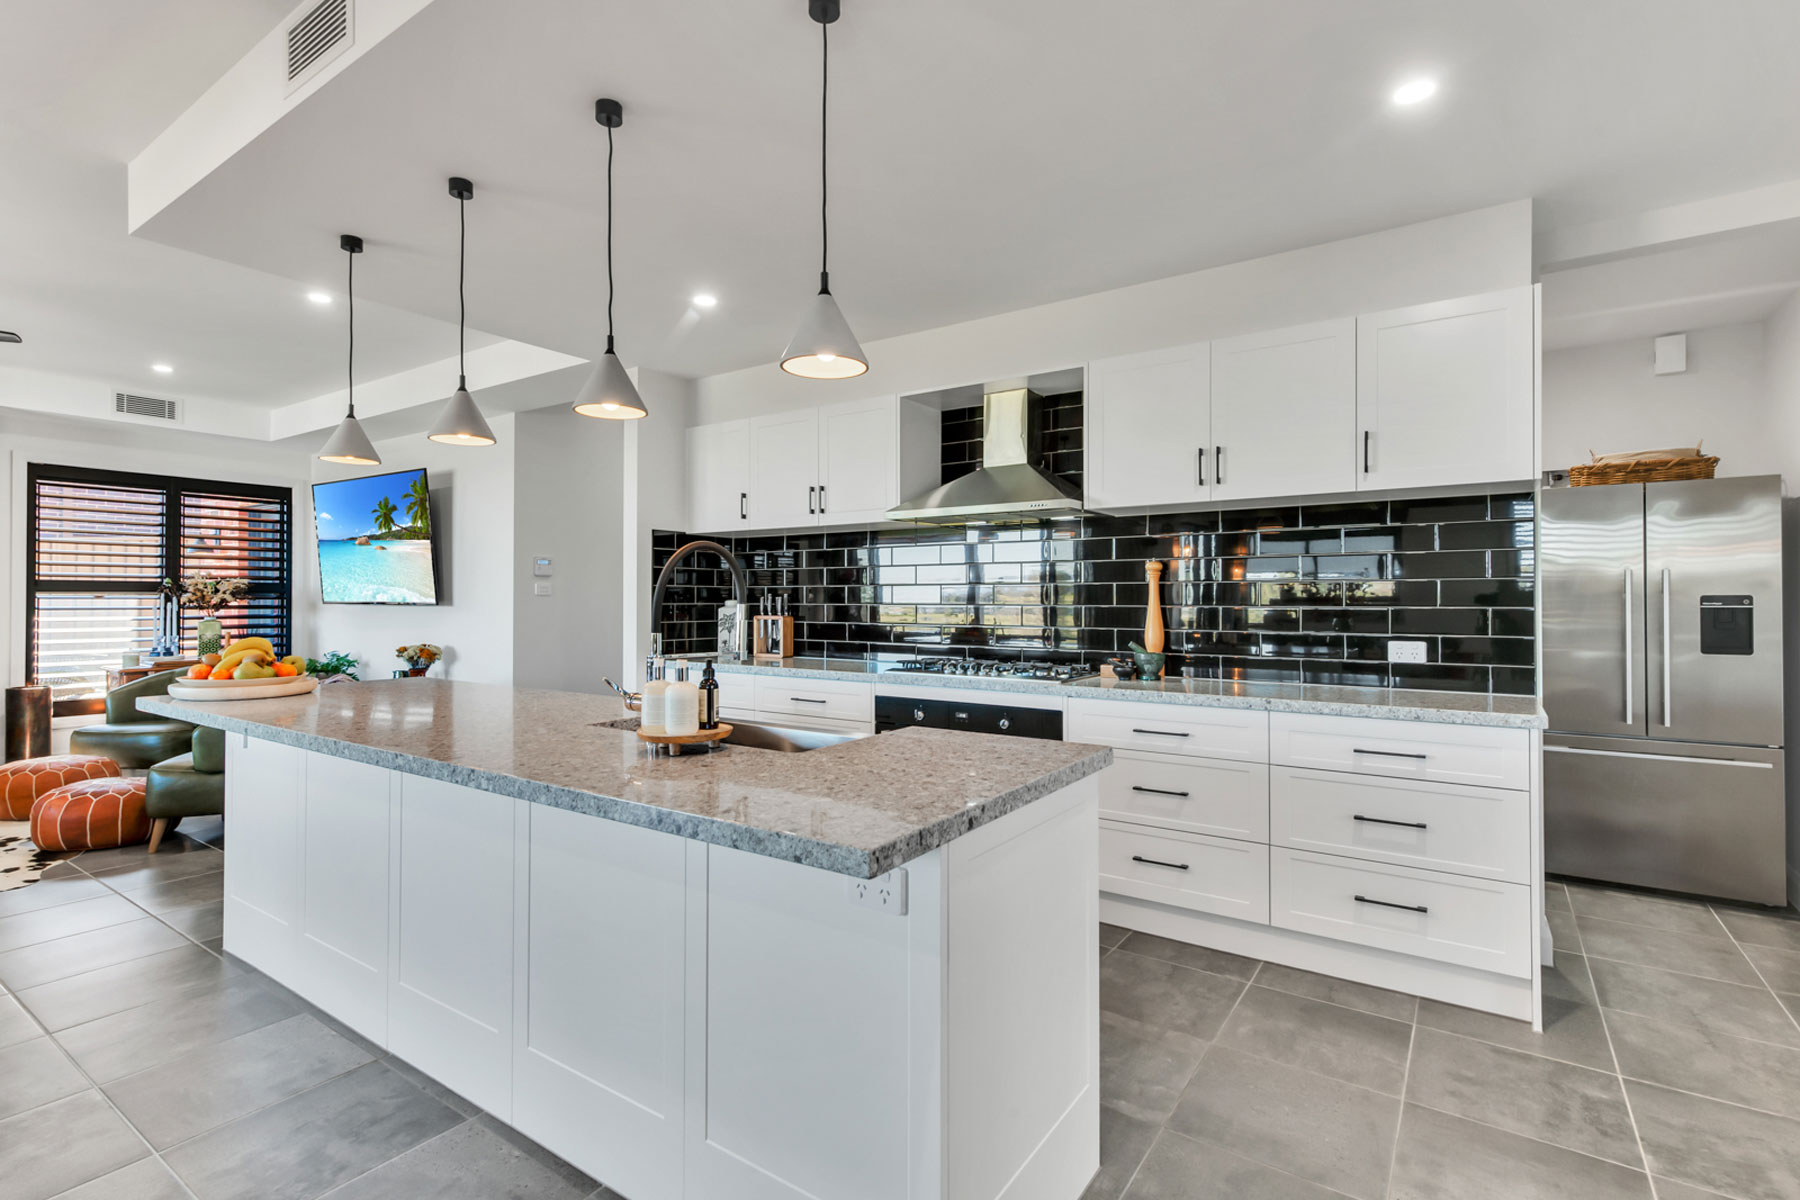 white gallery style kitchen with black tiled splashback